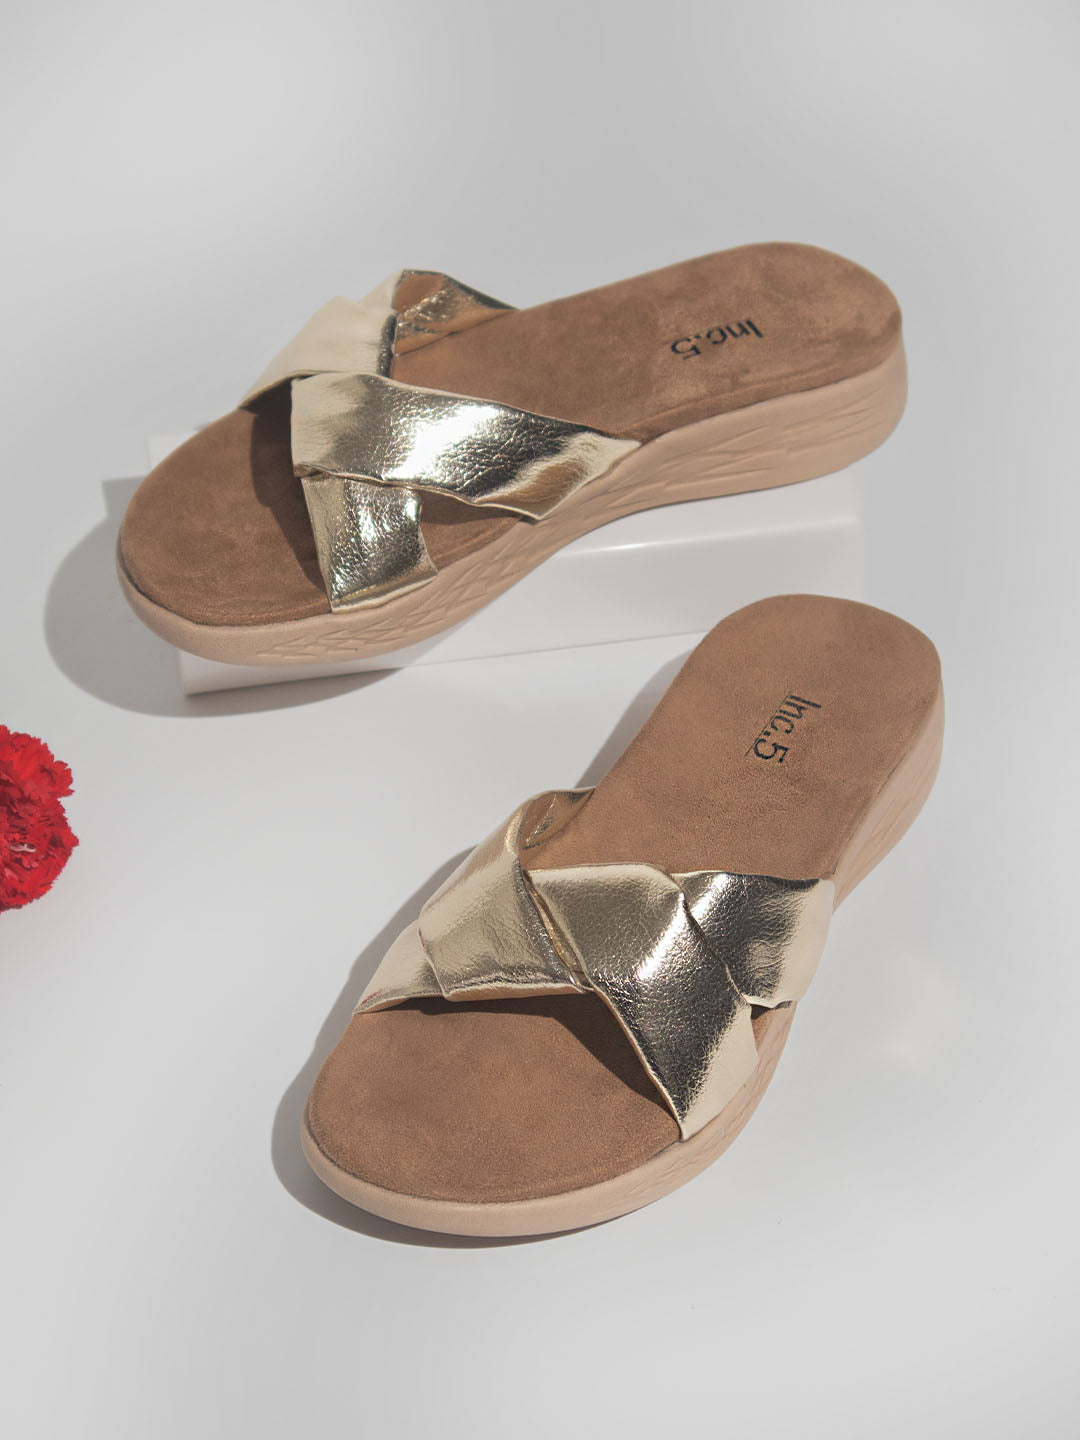 Block Heel Sandal Sultan Elegant Rose Gold Comfortable High Heels Sandals  For Women, Size: 36-41 at Rs 410/pair in New Delhi